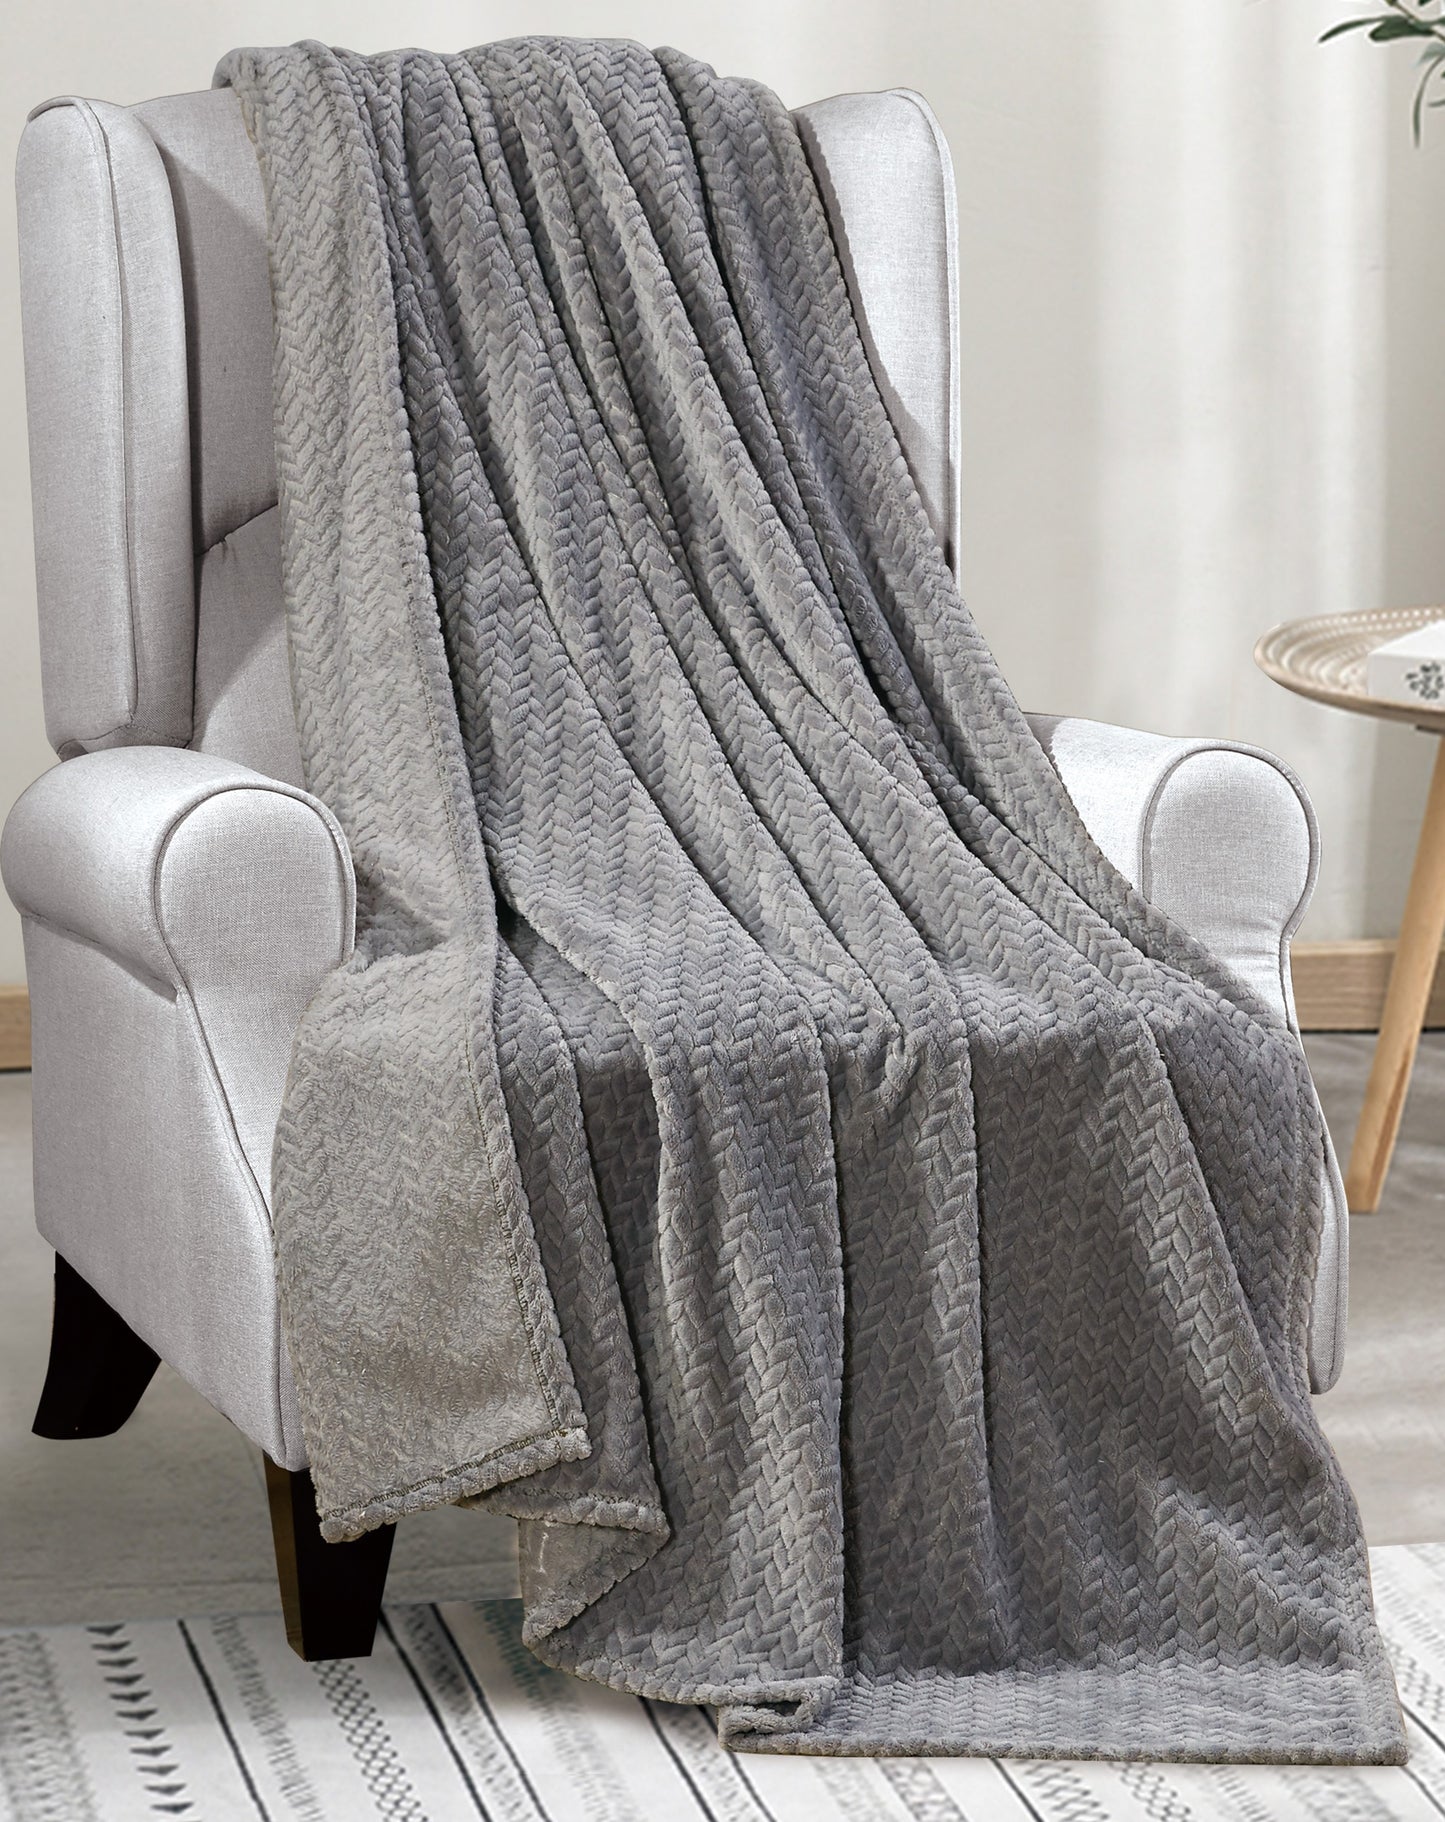 Elegant Comfort Plush All Season Lightweight Throw Blanket - 50 x 60 inches